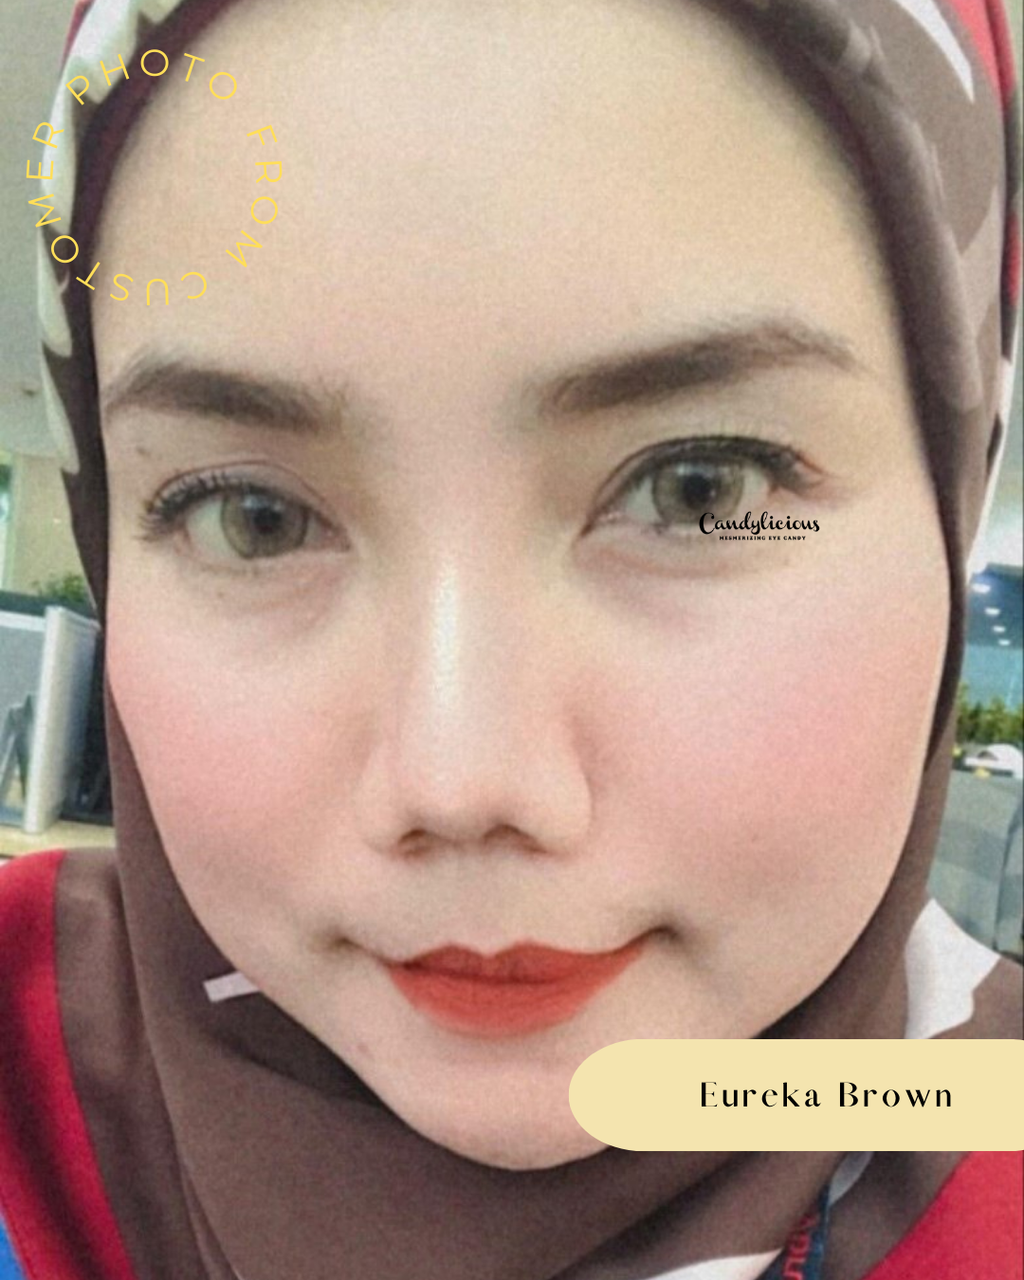 Eureka Brown